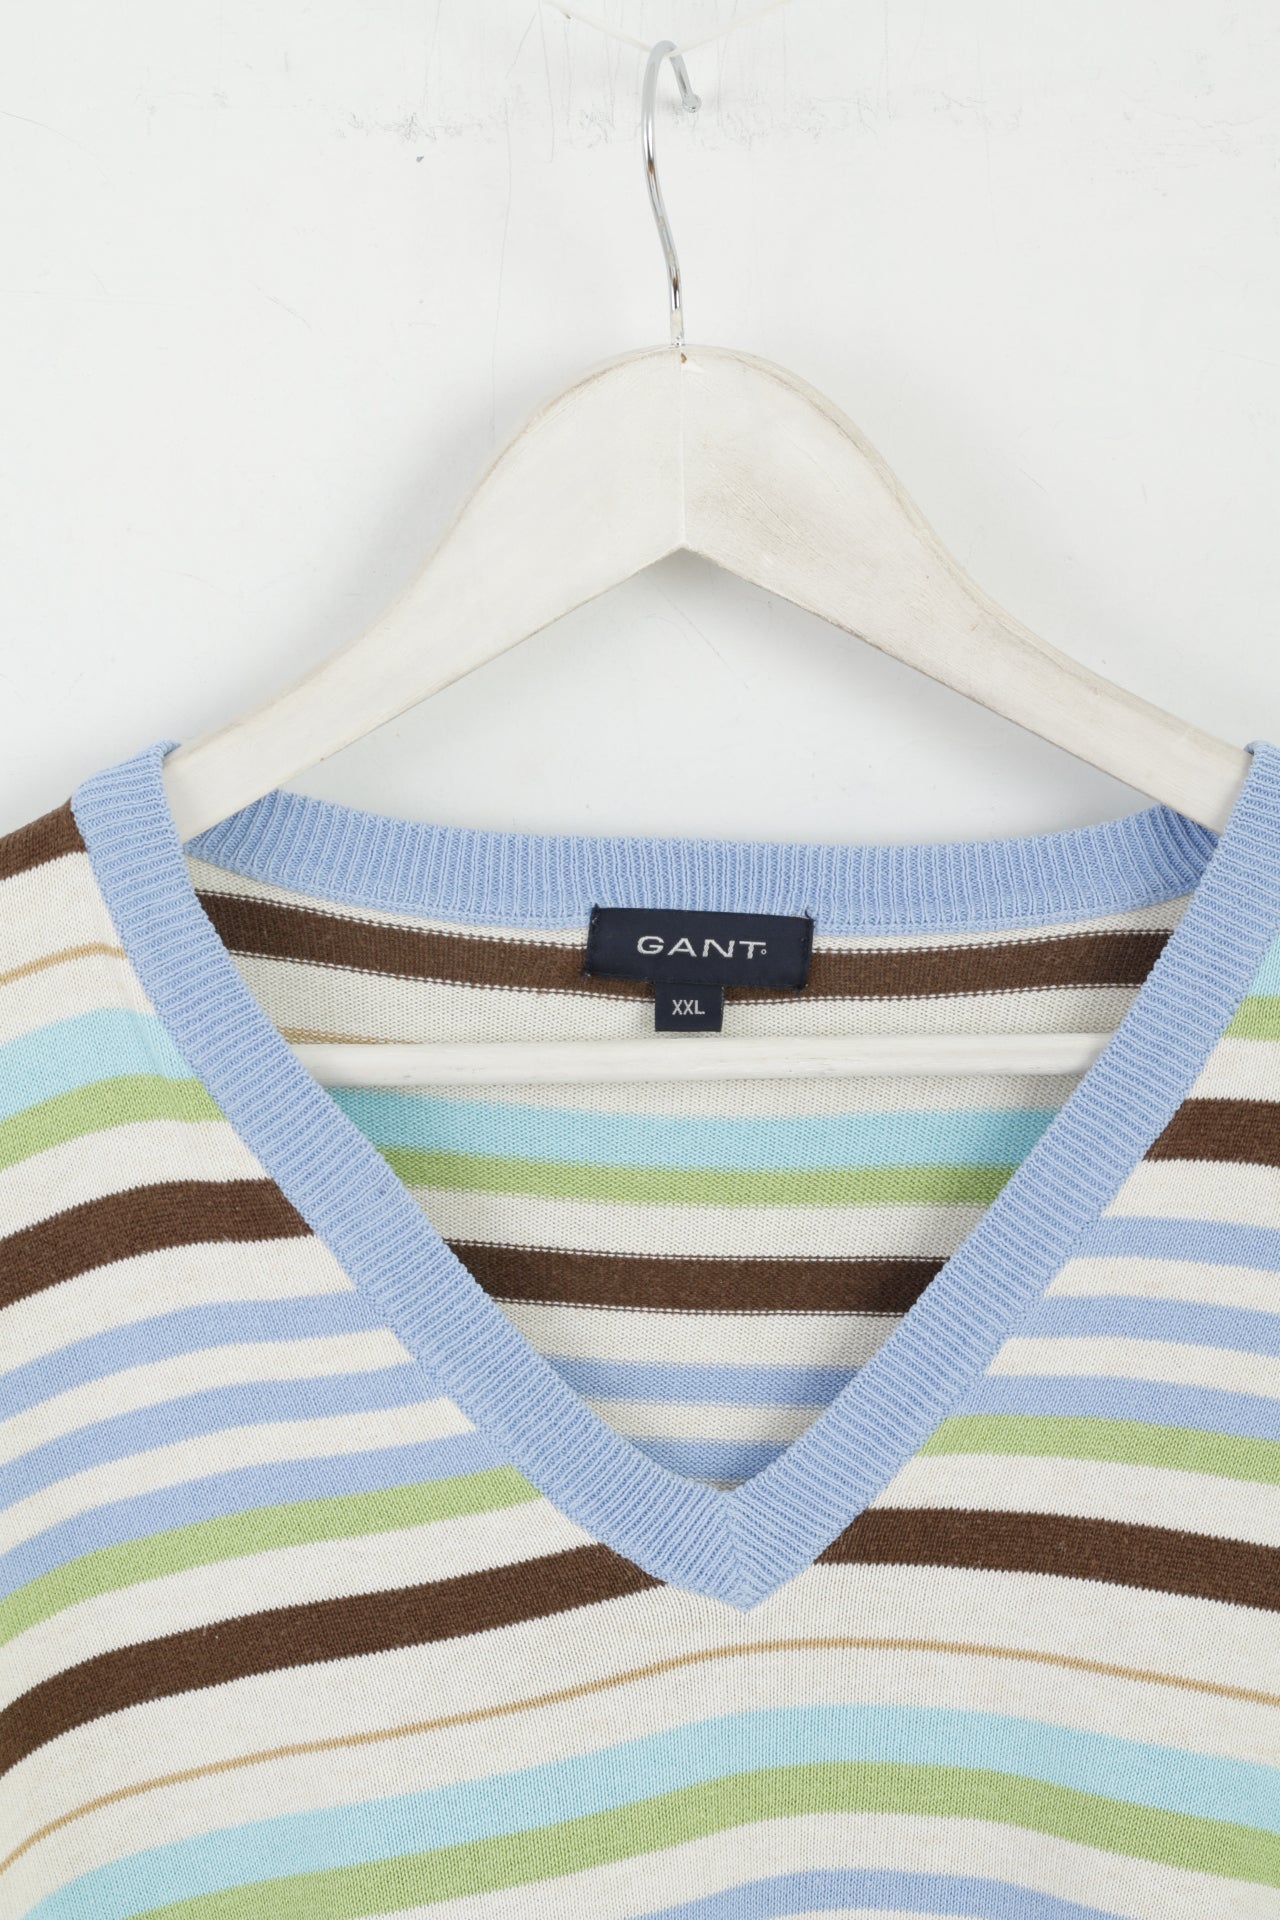 GANT Men XXL Jumper Beige Blue Striped Cotton V Neck Classic Light Sweater